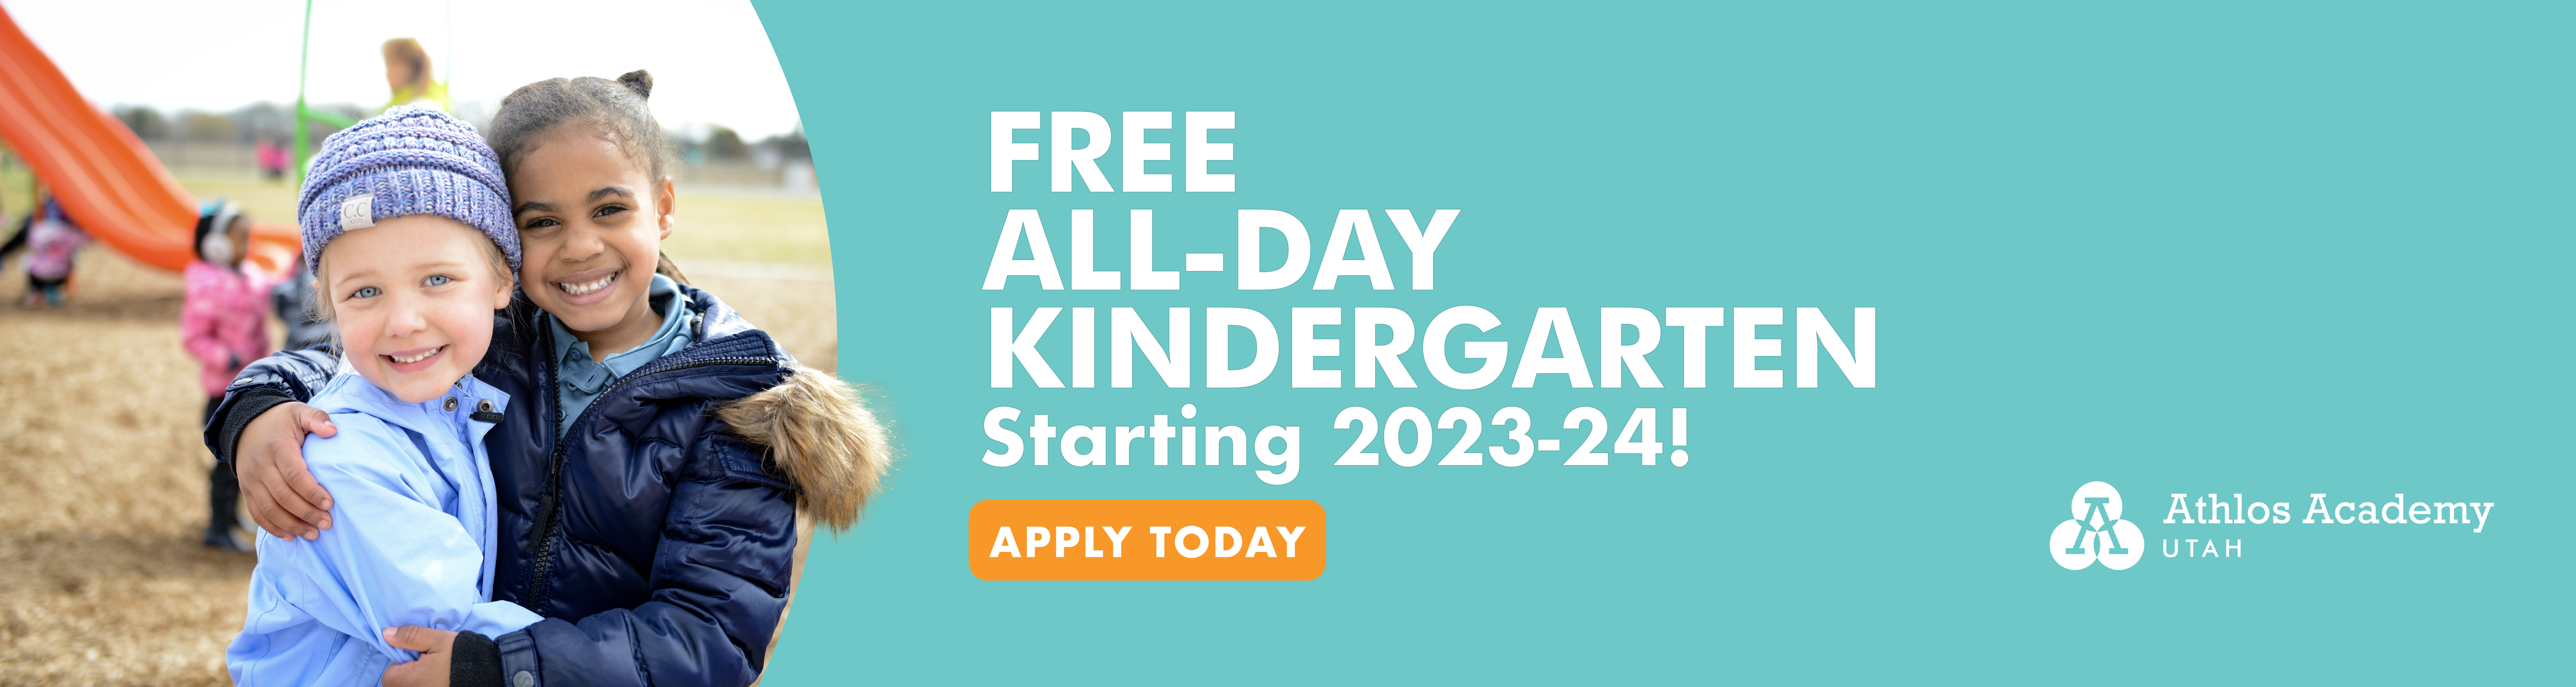 Free All-Day Kindergarten Starting in 2023-24